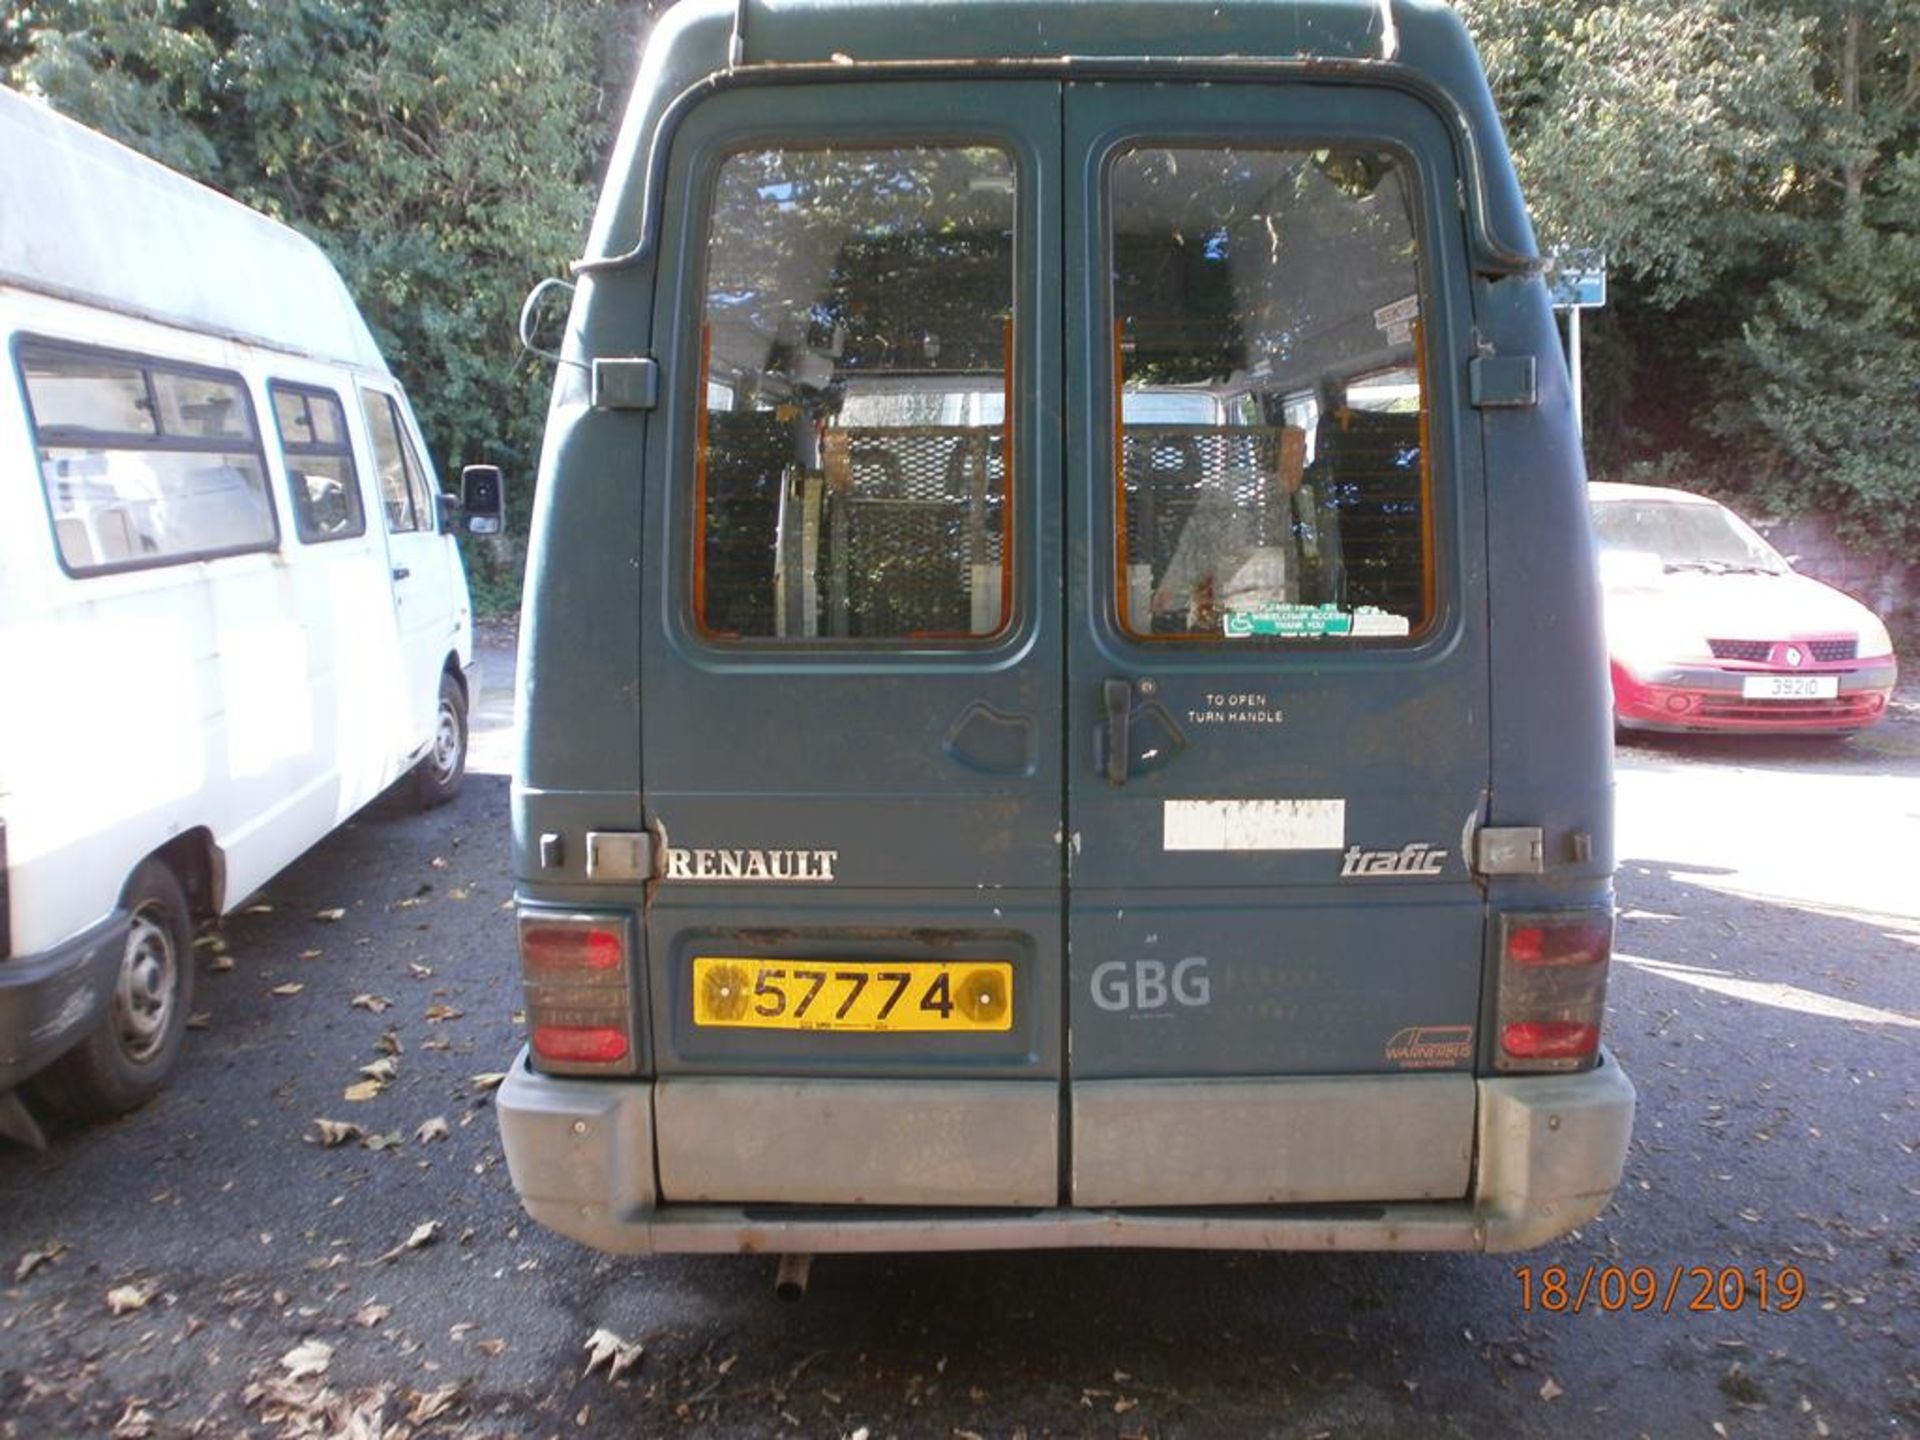 Renault Trafic Crew Cab Van, LWB, 2.0D - Image 3 of 6